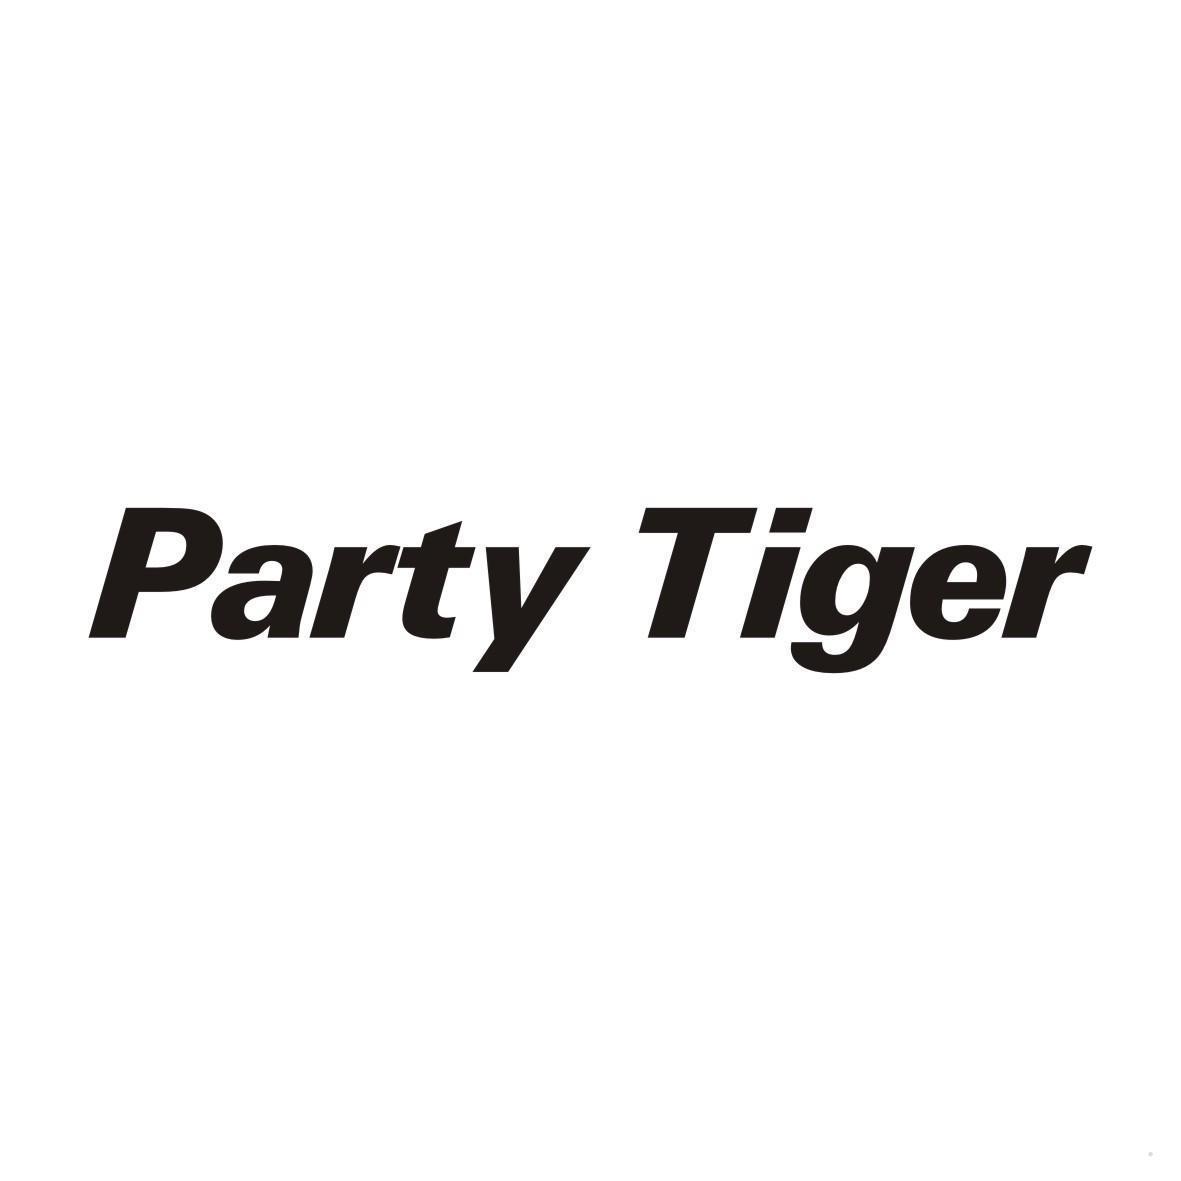 PARTY TIGER